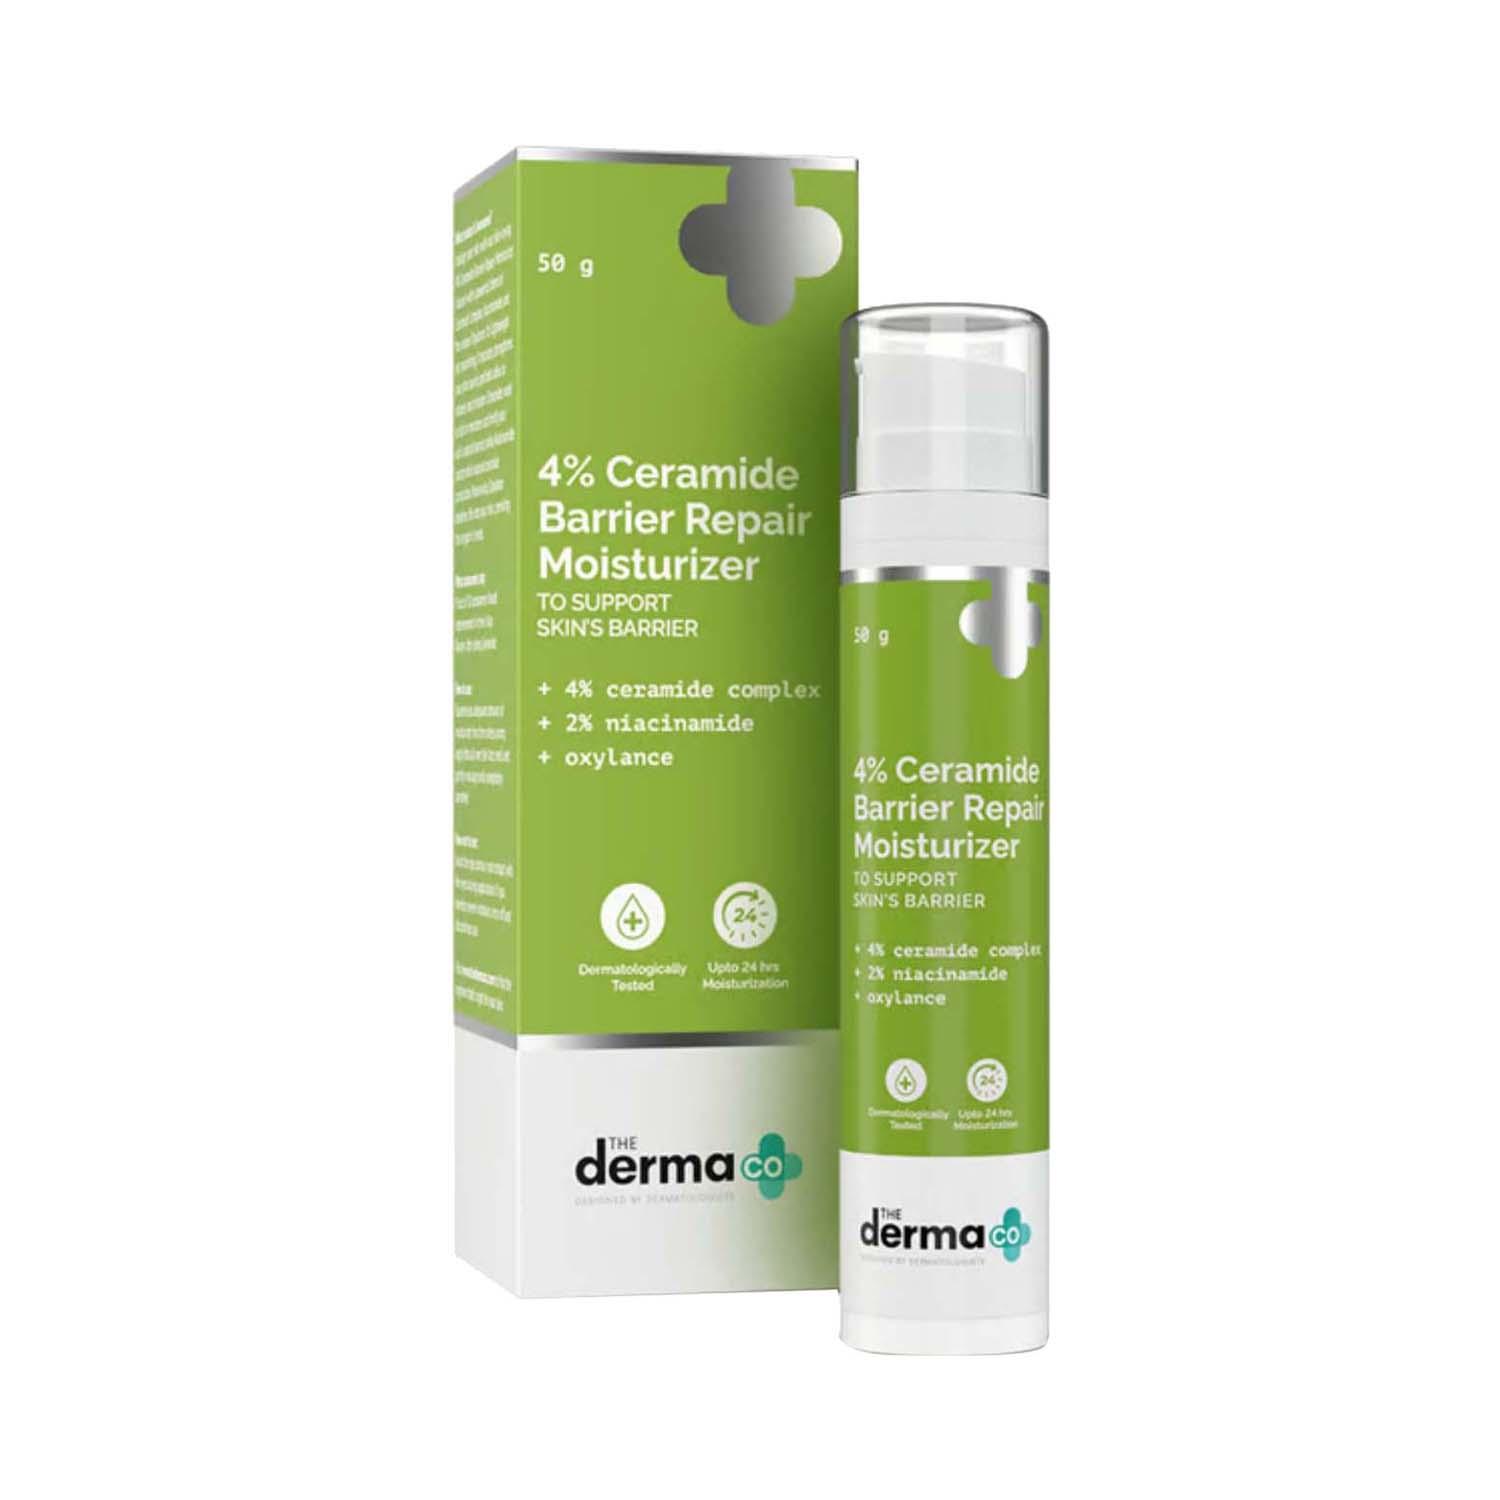 The Derma Co | The Derma Co. 4% Ceramide Barrier Repair Moisturizer (50 g)